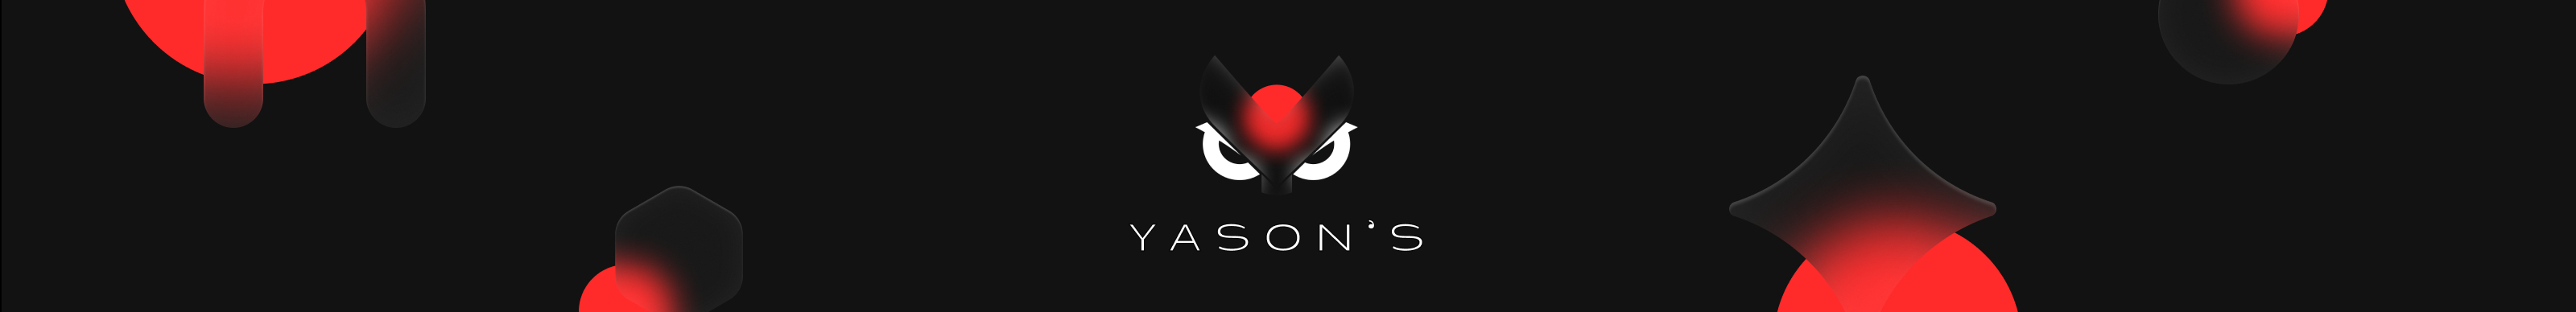 Yason's Design's profile banner